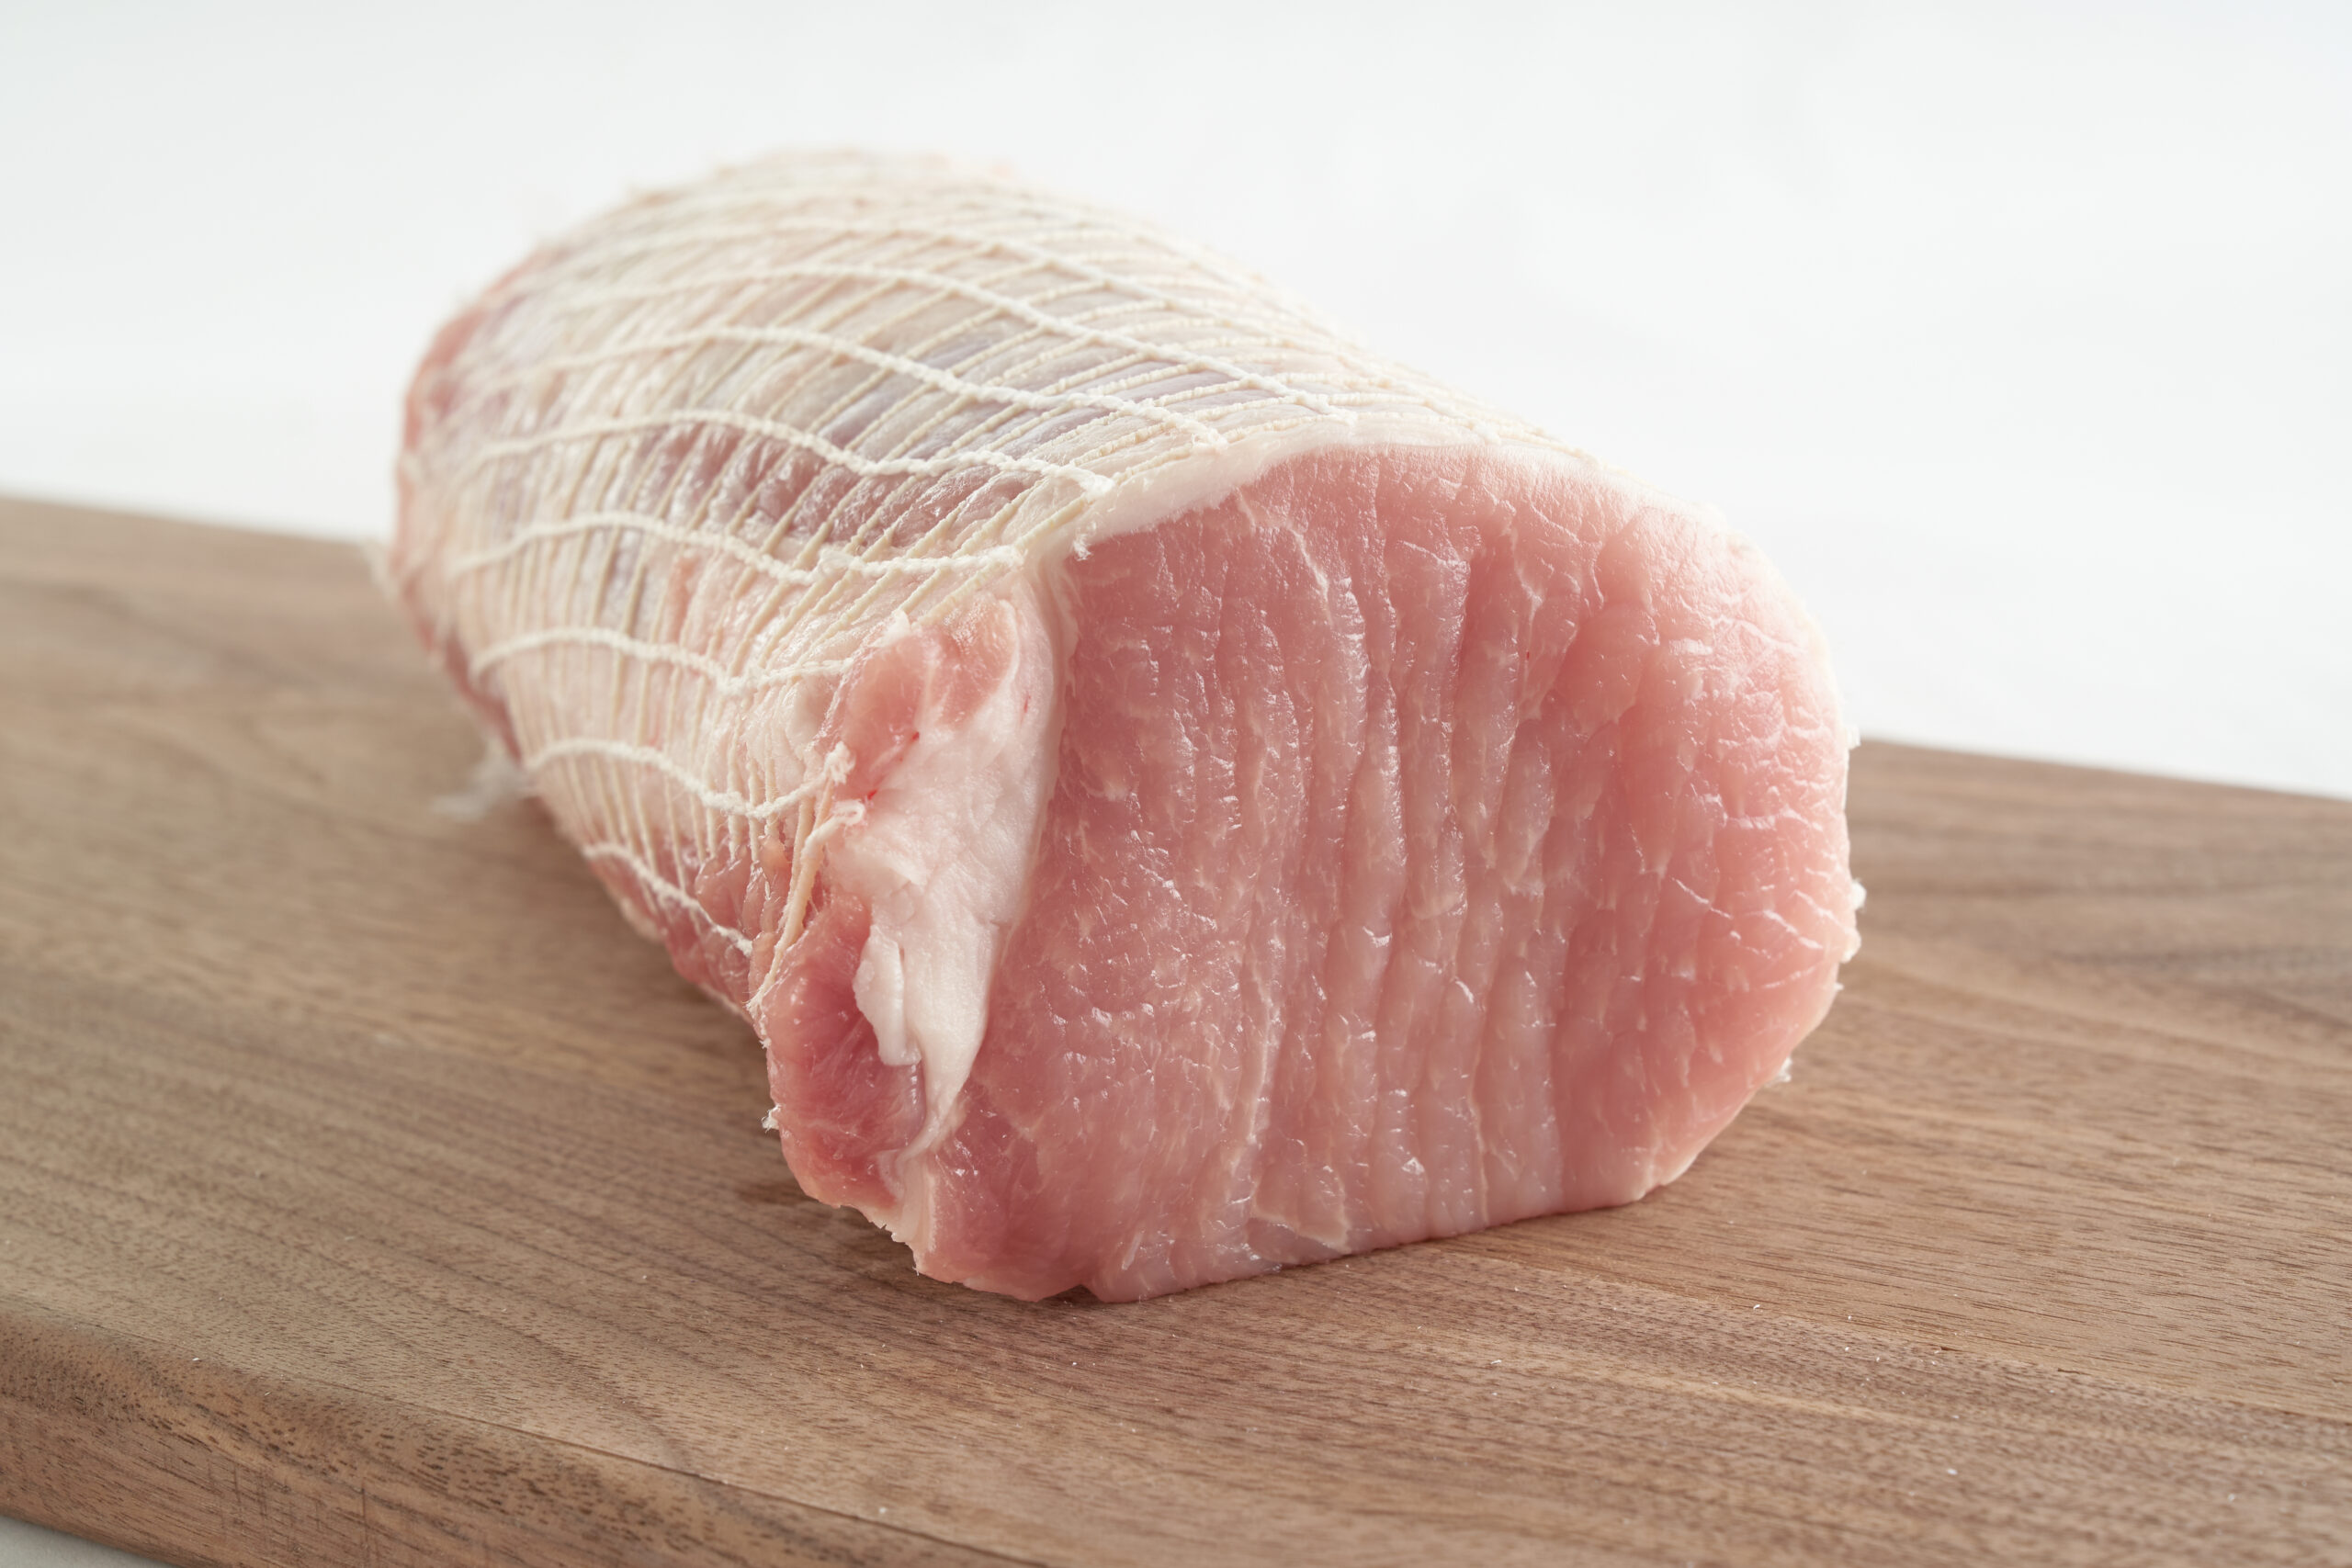 Boneless Pork Loin Roast | Spenst Bros. Premium Meats